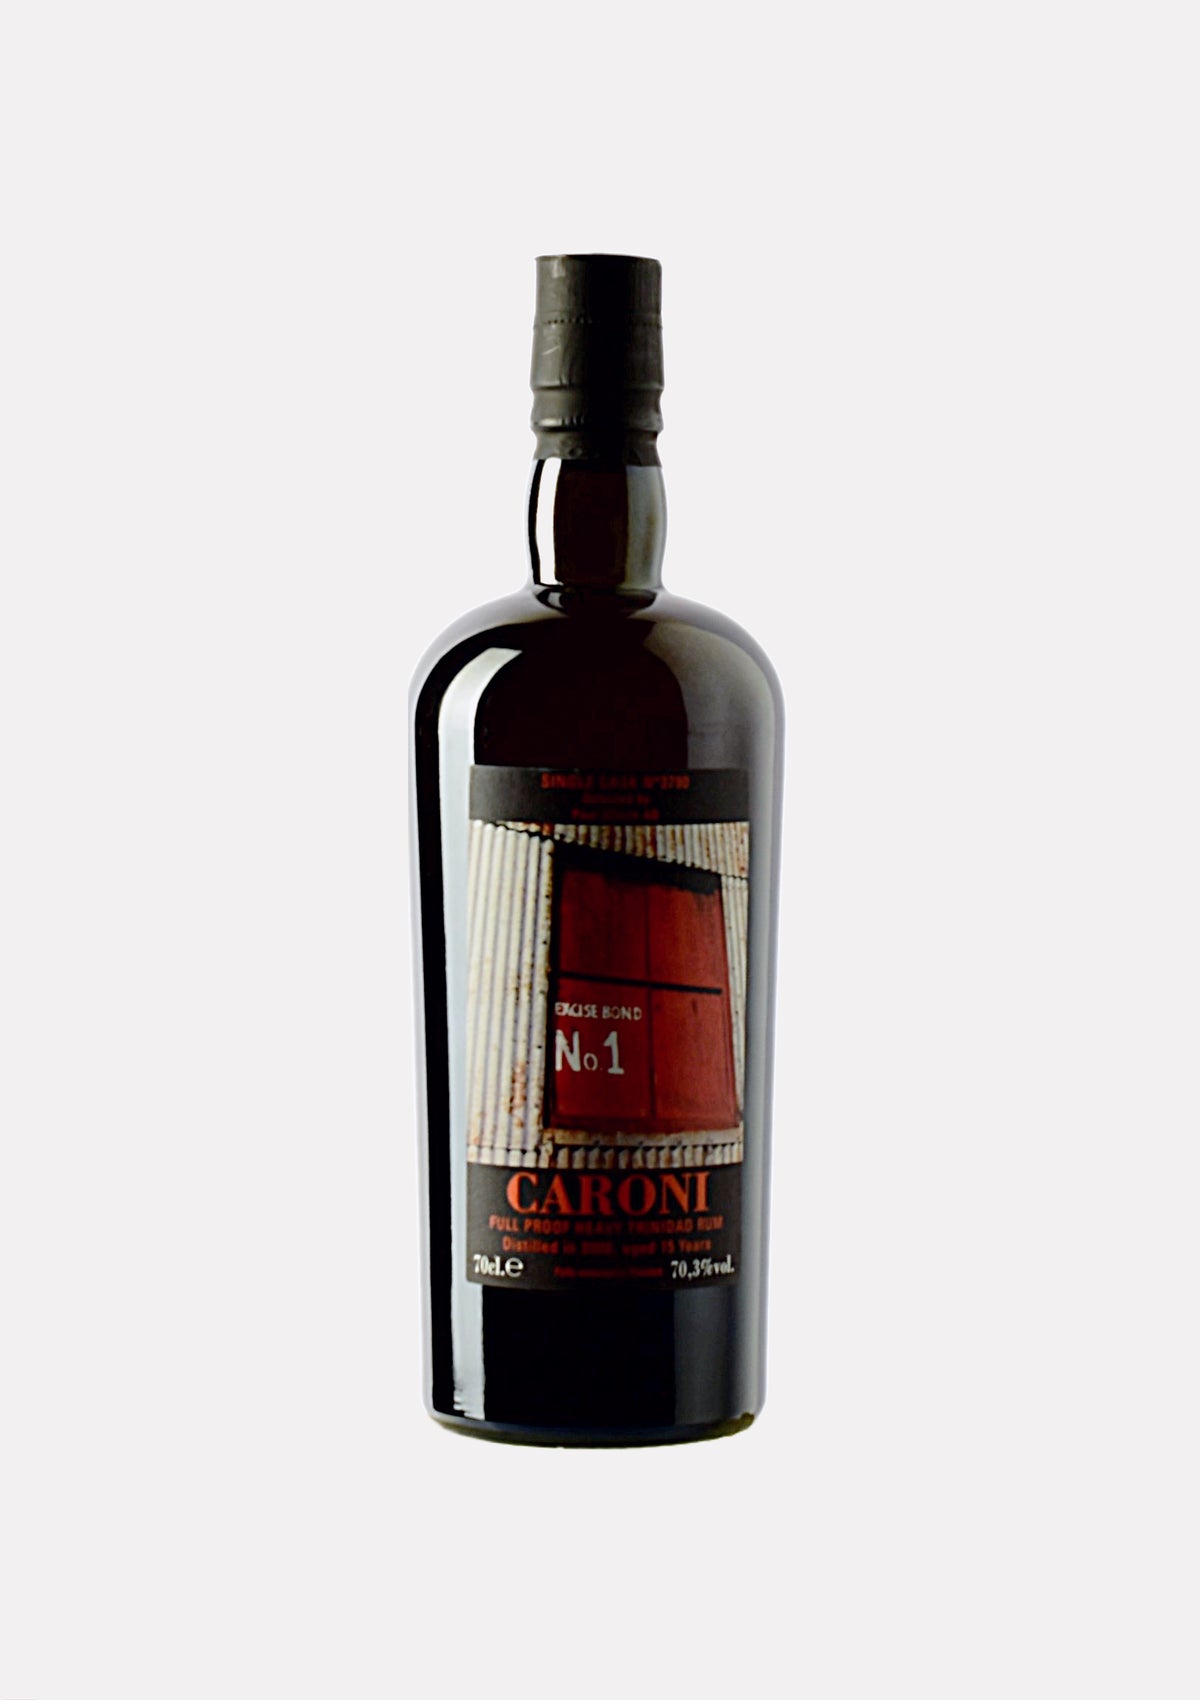 Velier Caroni Heavy Trinidad Rum 15 Jahre (Paul Ullrich)